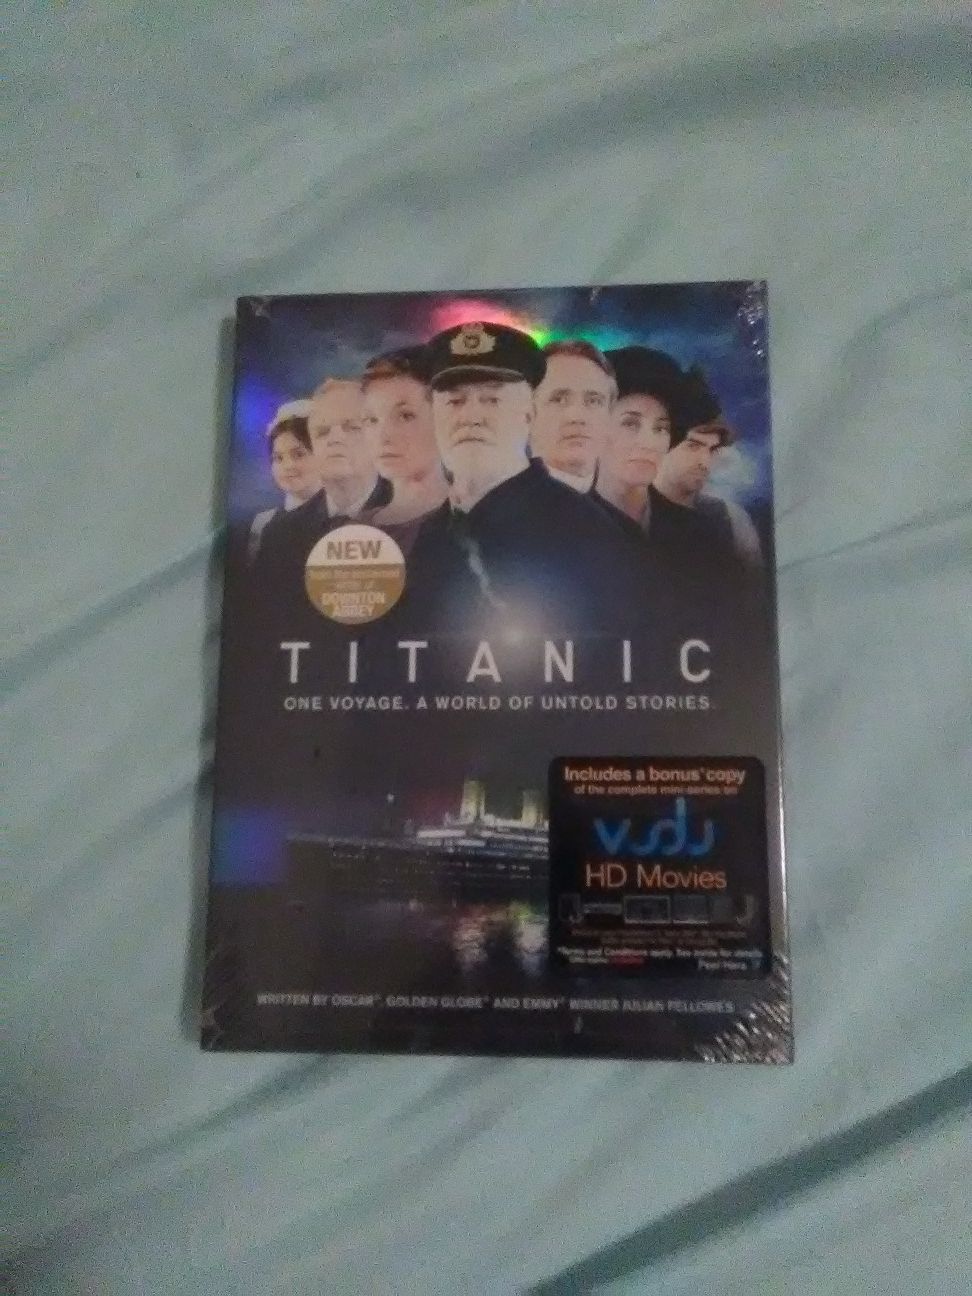 Brand new Titanic dvd (the untold story)